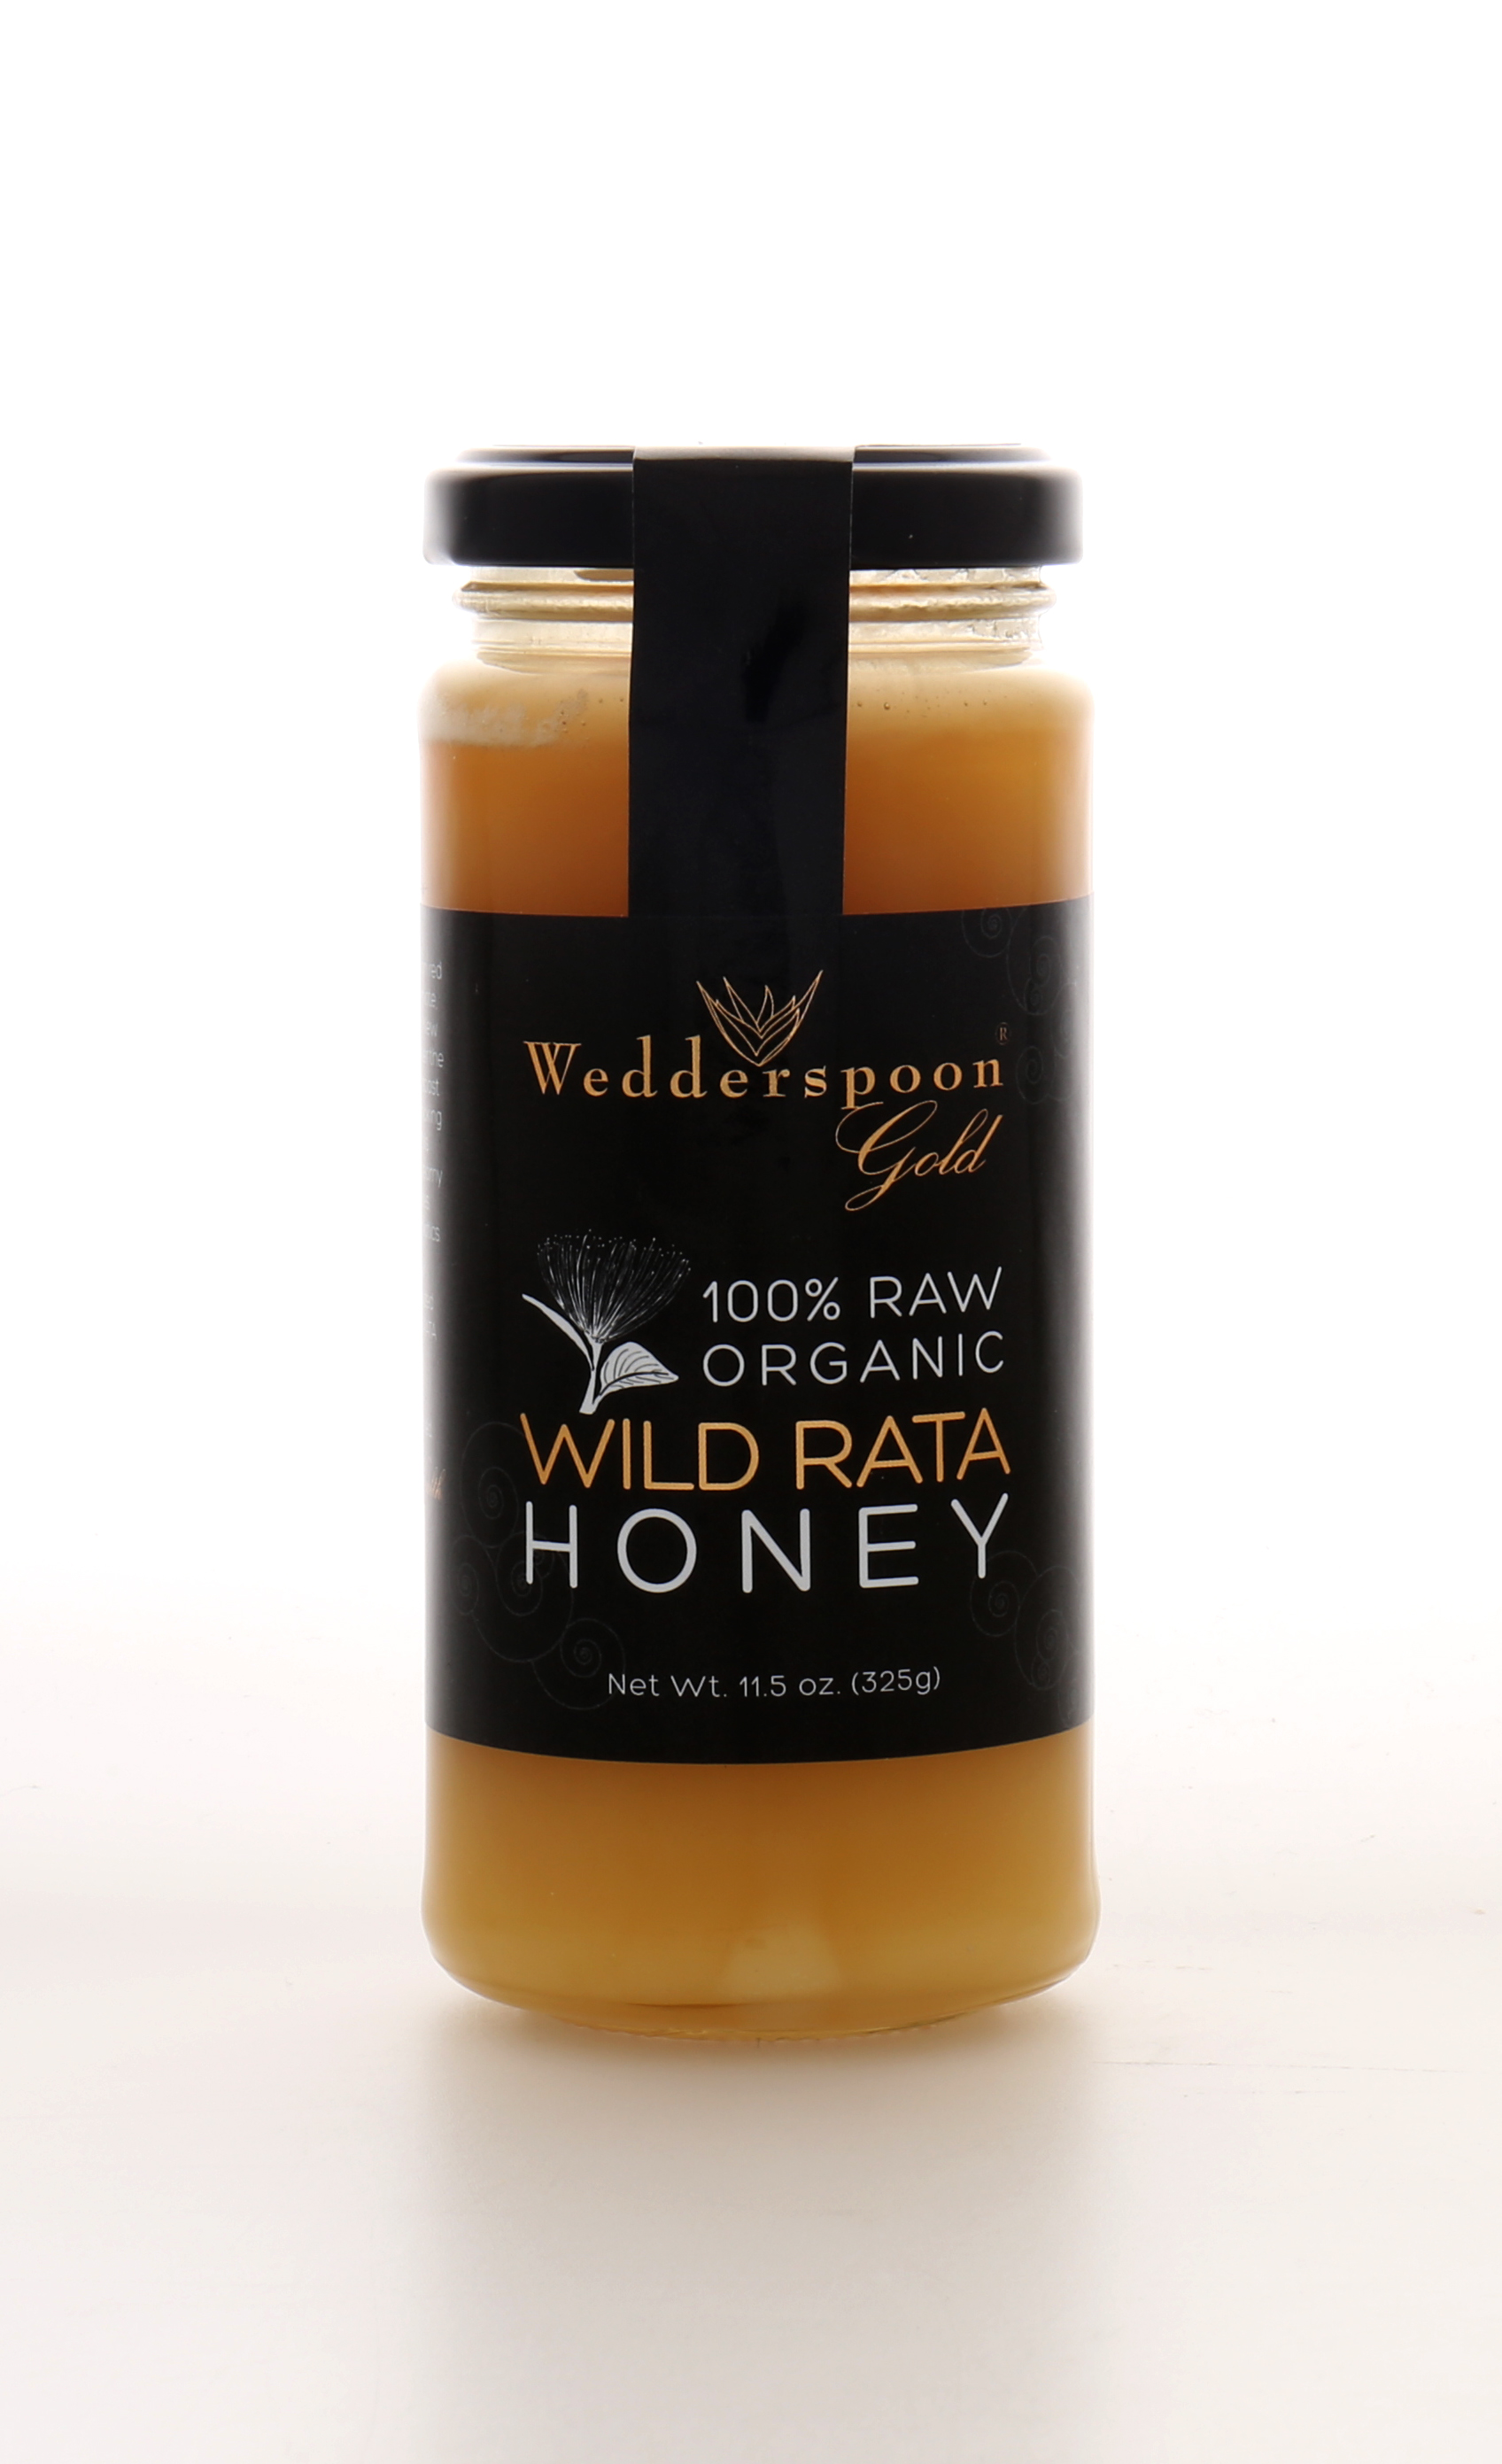 Gold 100% Raw Organic Wild Rata Honey